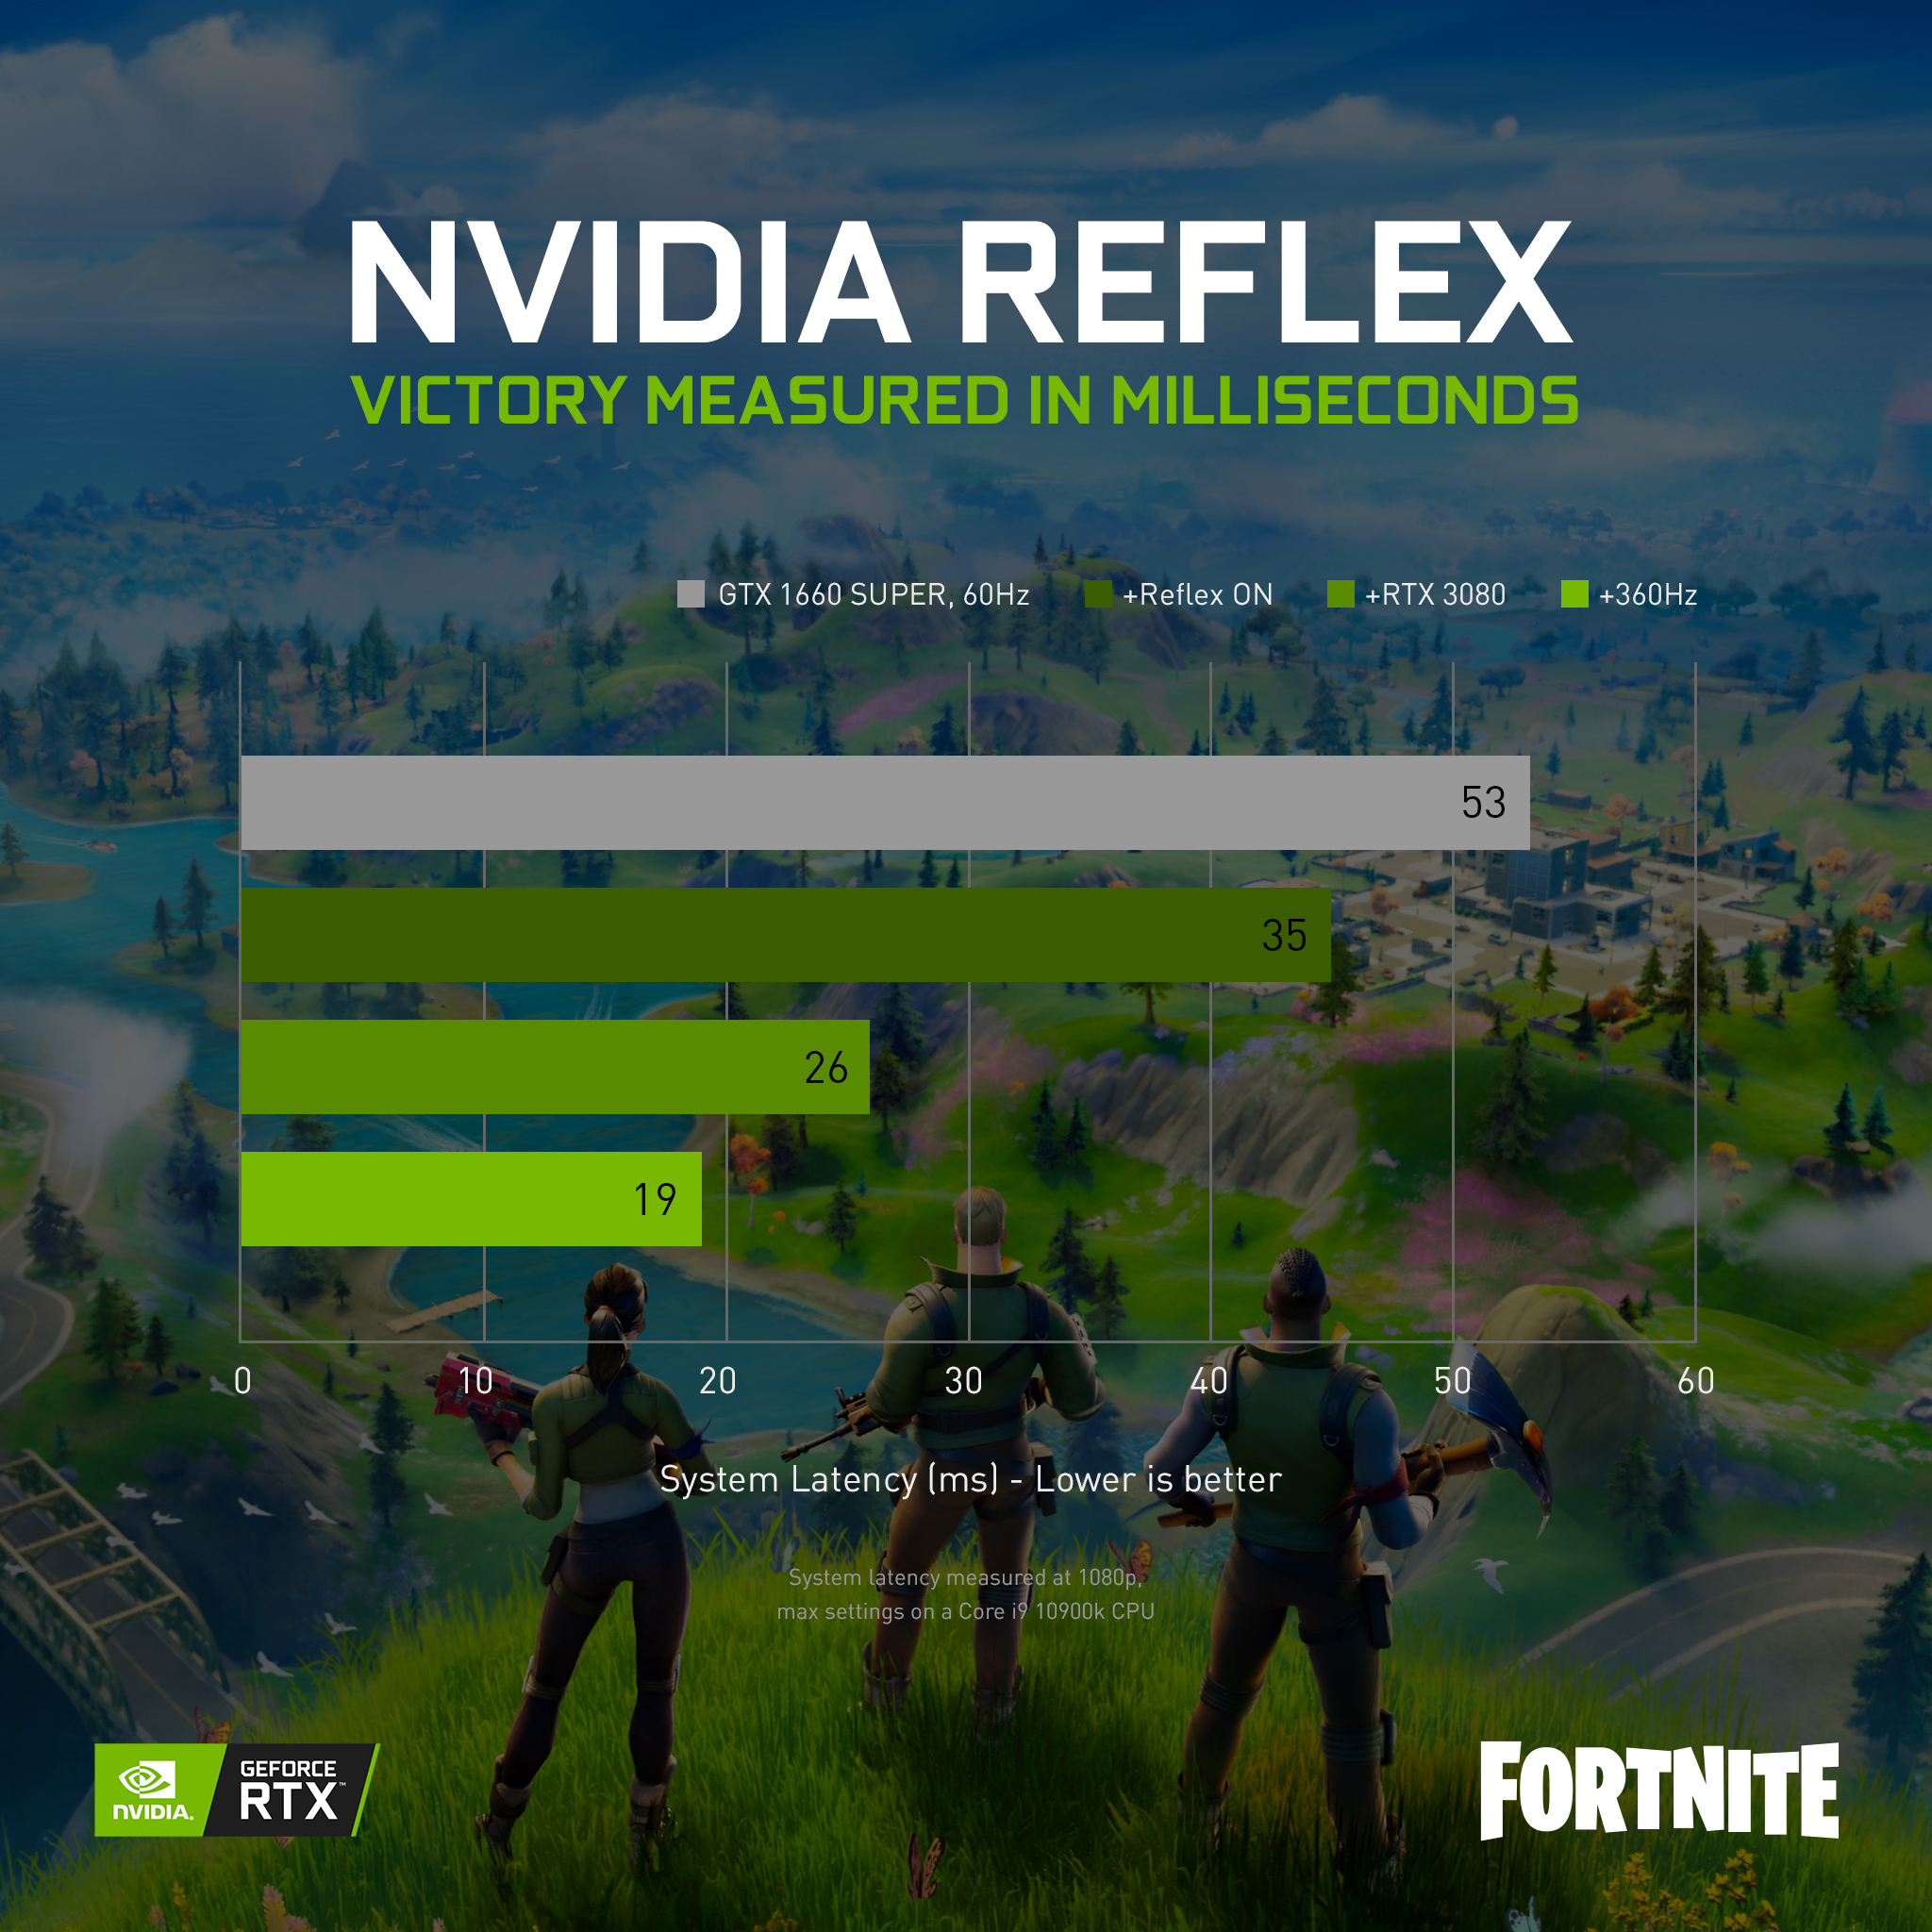 nvidia-reflex-social-perf-fortnite-2048x2048